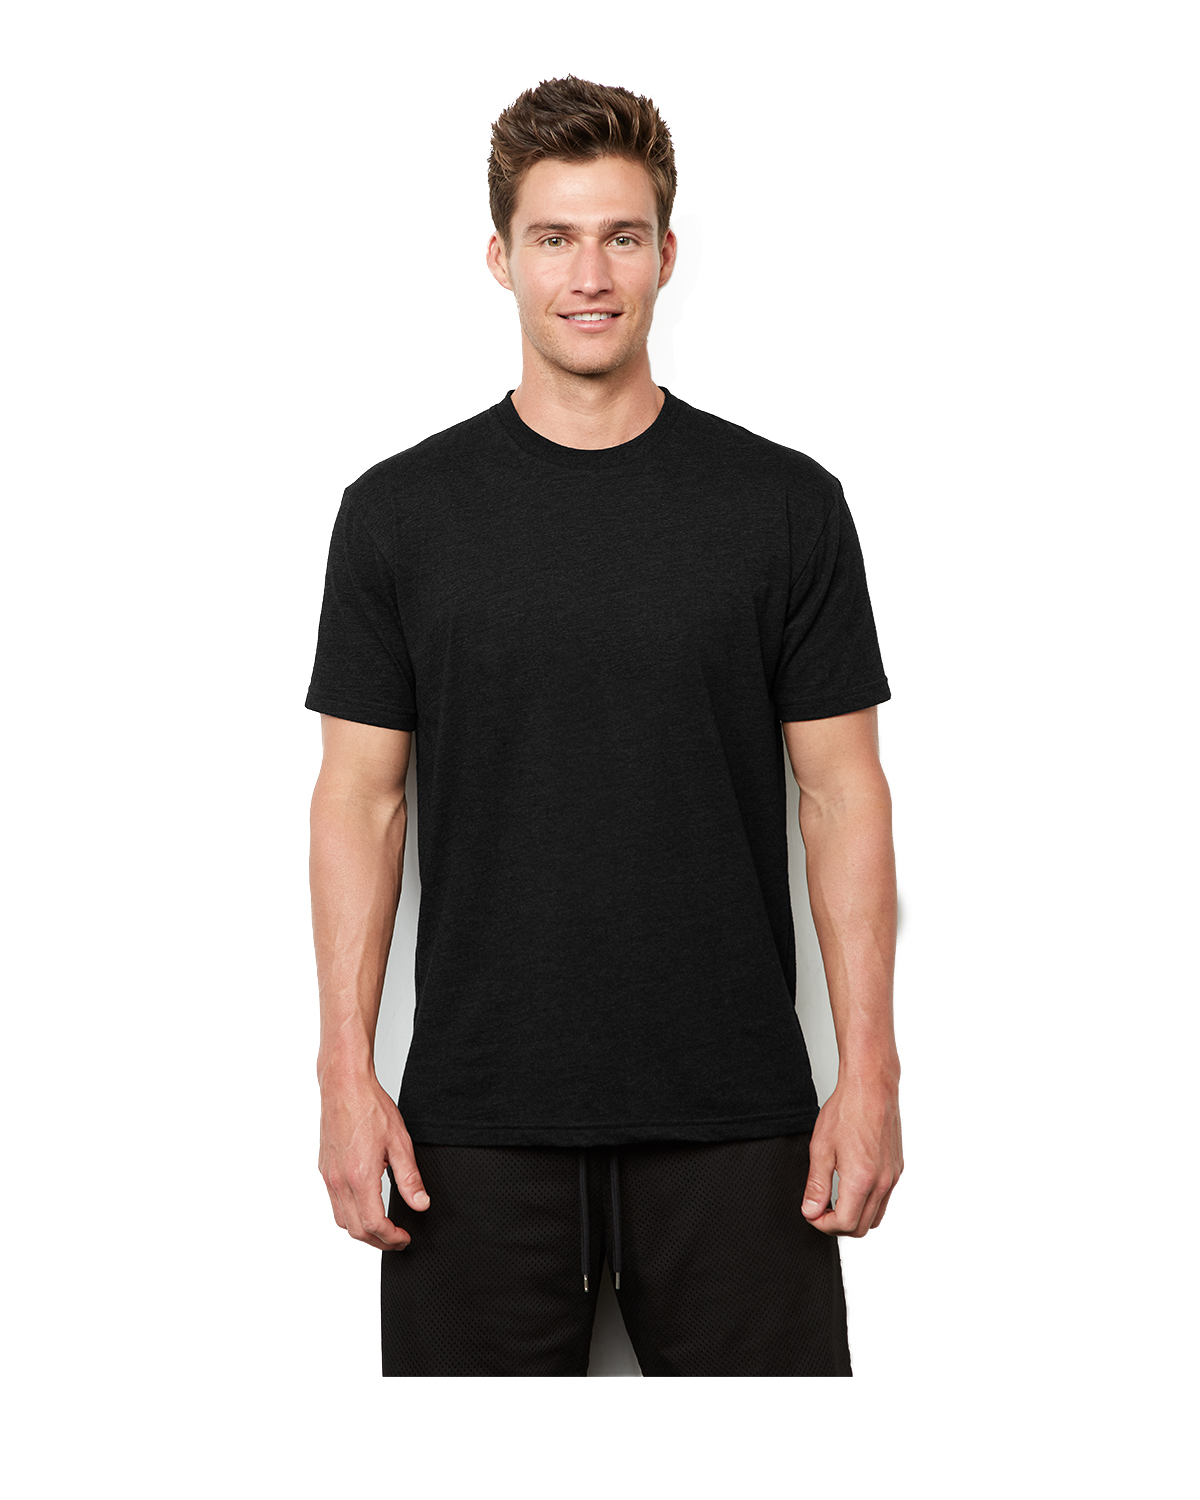 Next Level Apparel 4600 - Unisex Eco Heavyweight T-Shirt $7.56 - T-Shirts